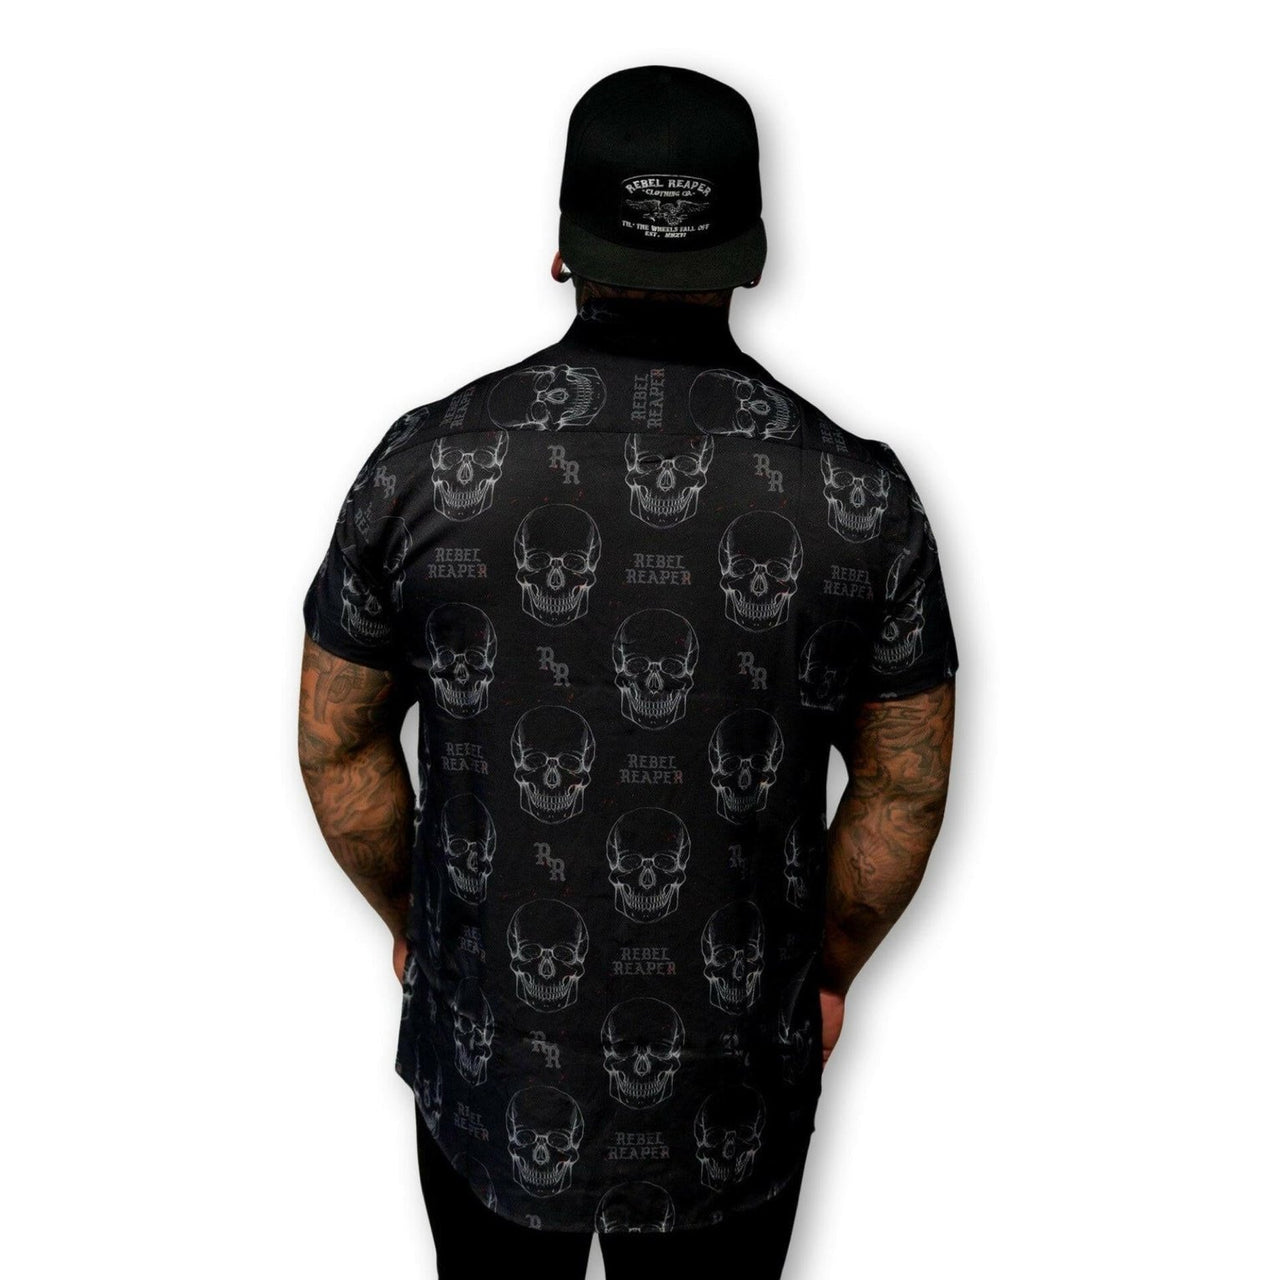 Splatter Skull Shirt - Rebel Reaper Clothing Company Button Up Shirt Men's